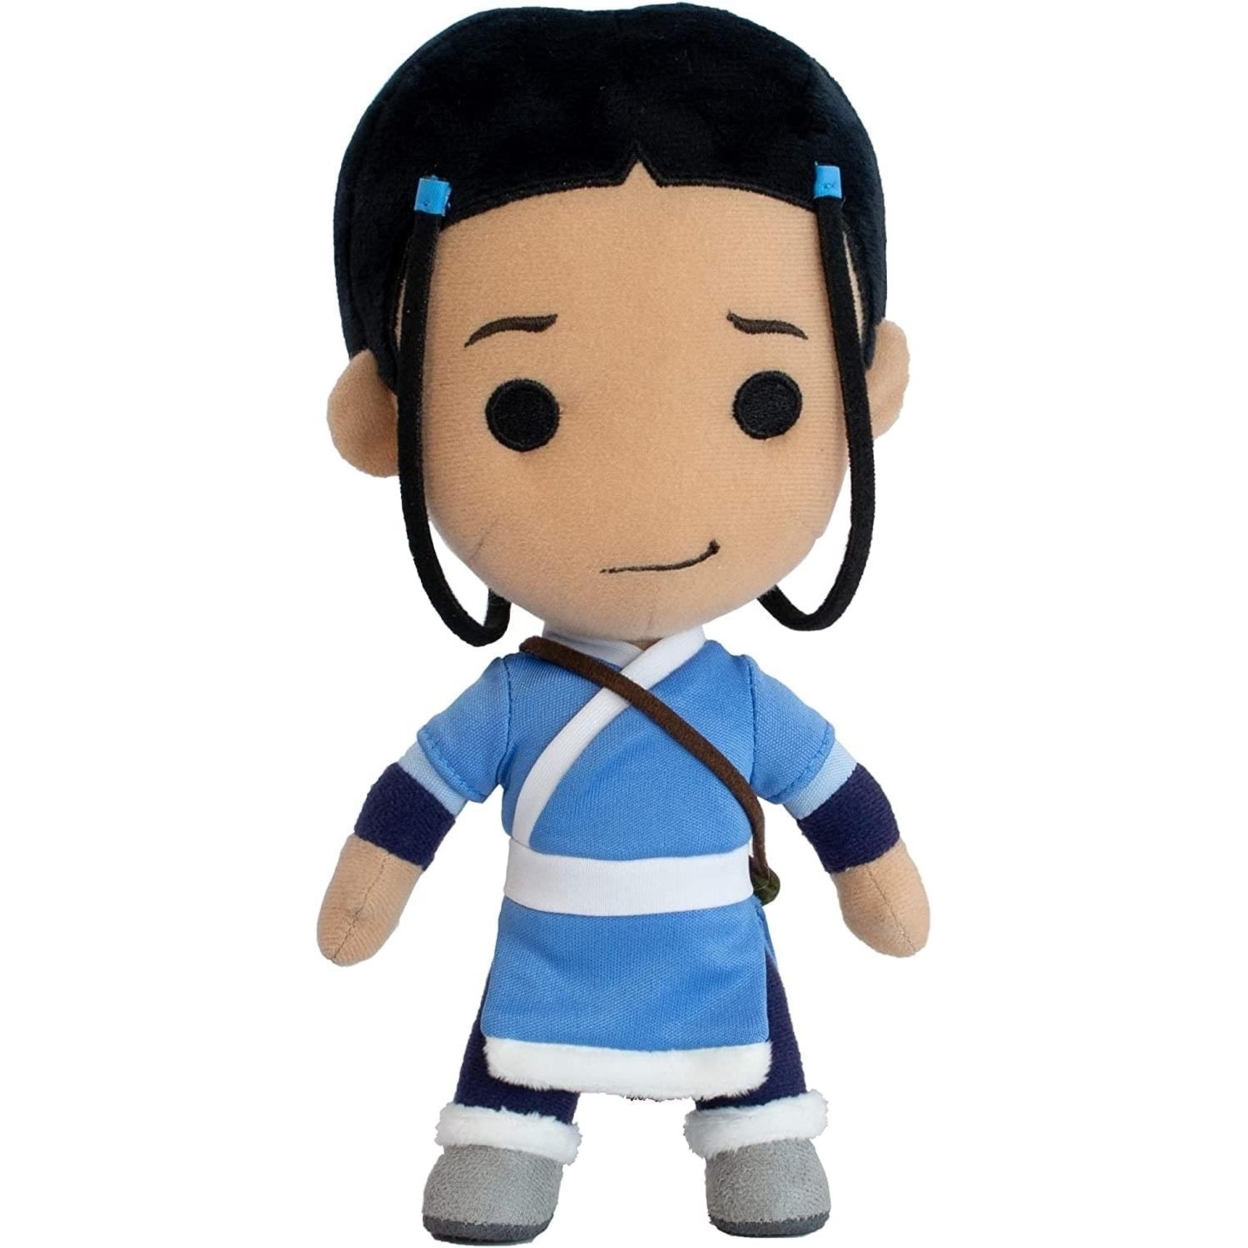 Avatar The Last Airbender Katara Q-Pals Plush Waterbender 8 QMx Doll Soft Collectible Character Quantum Mechanix